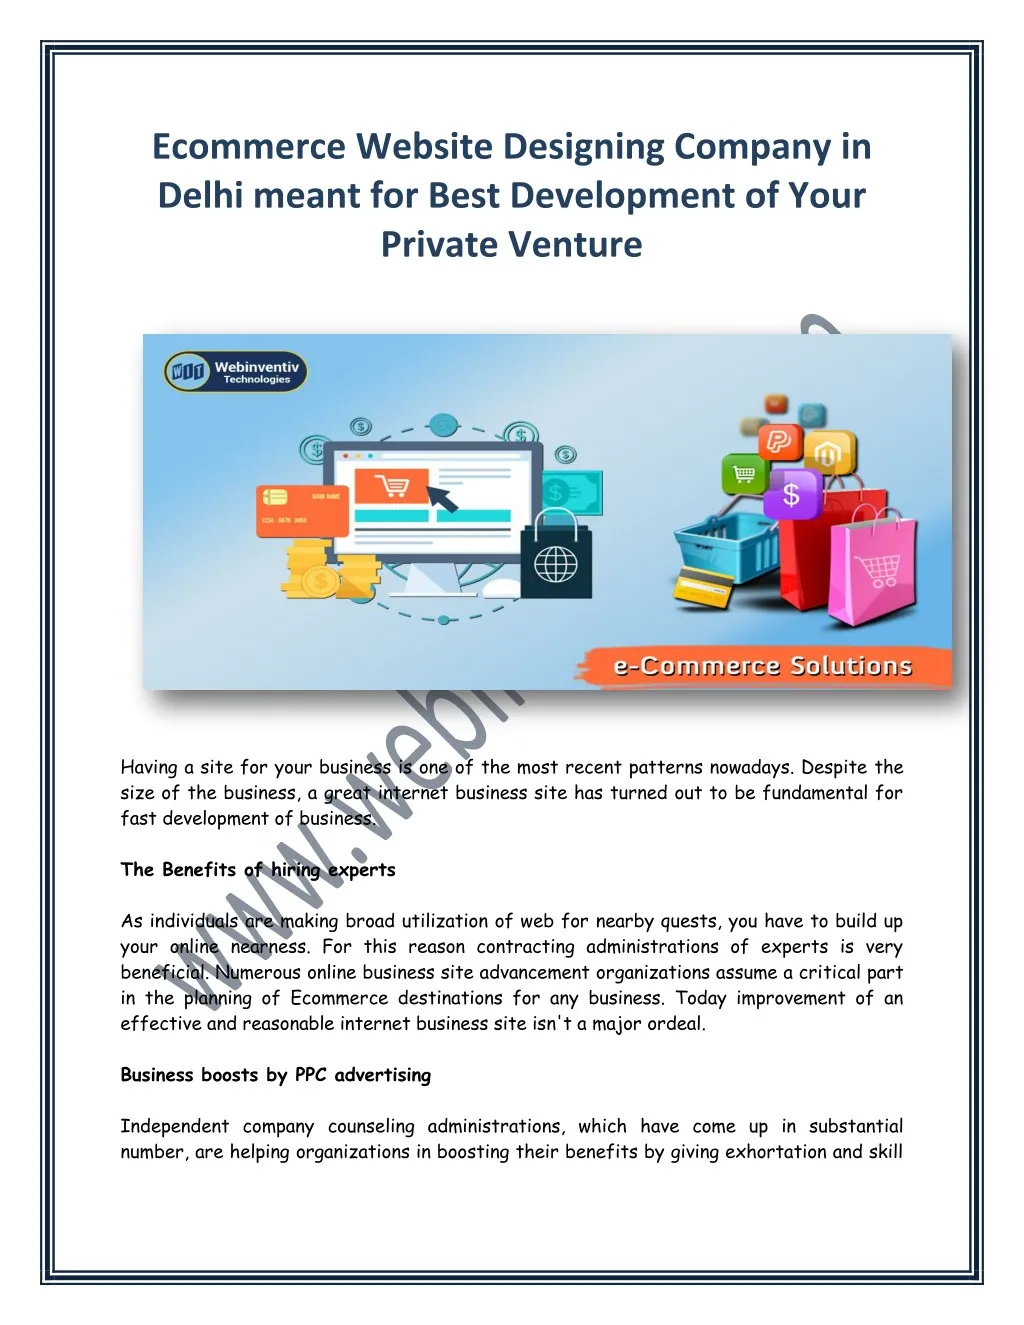 ecommerce website designing company in delhi